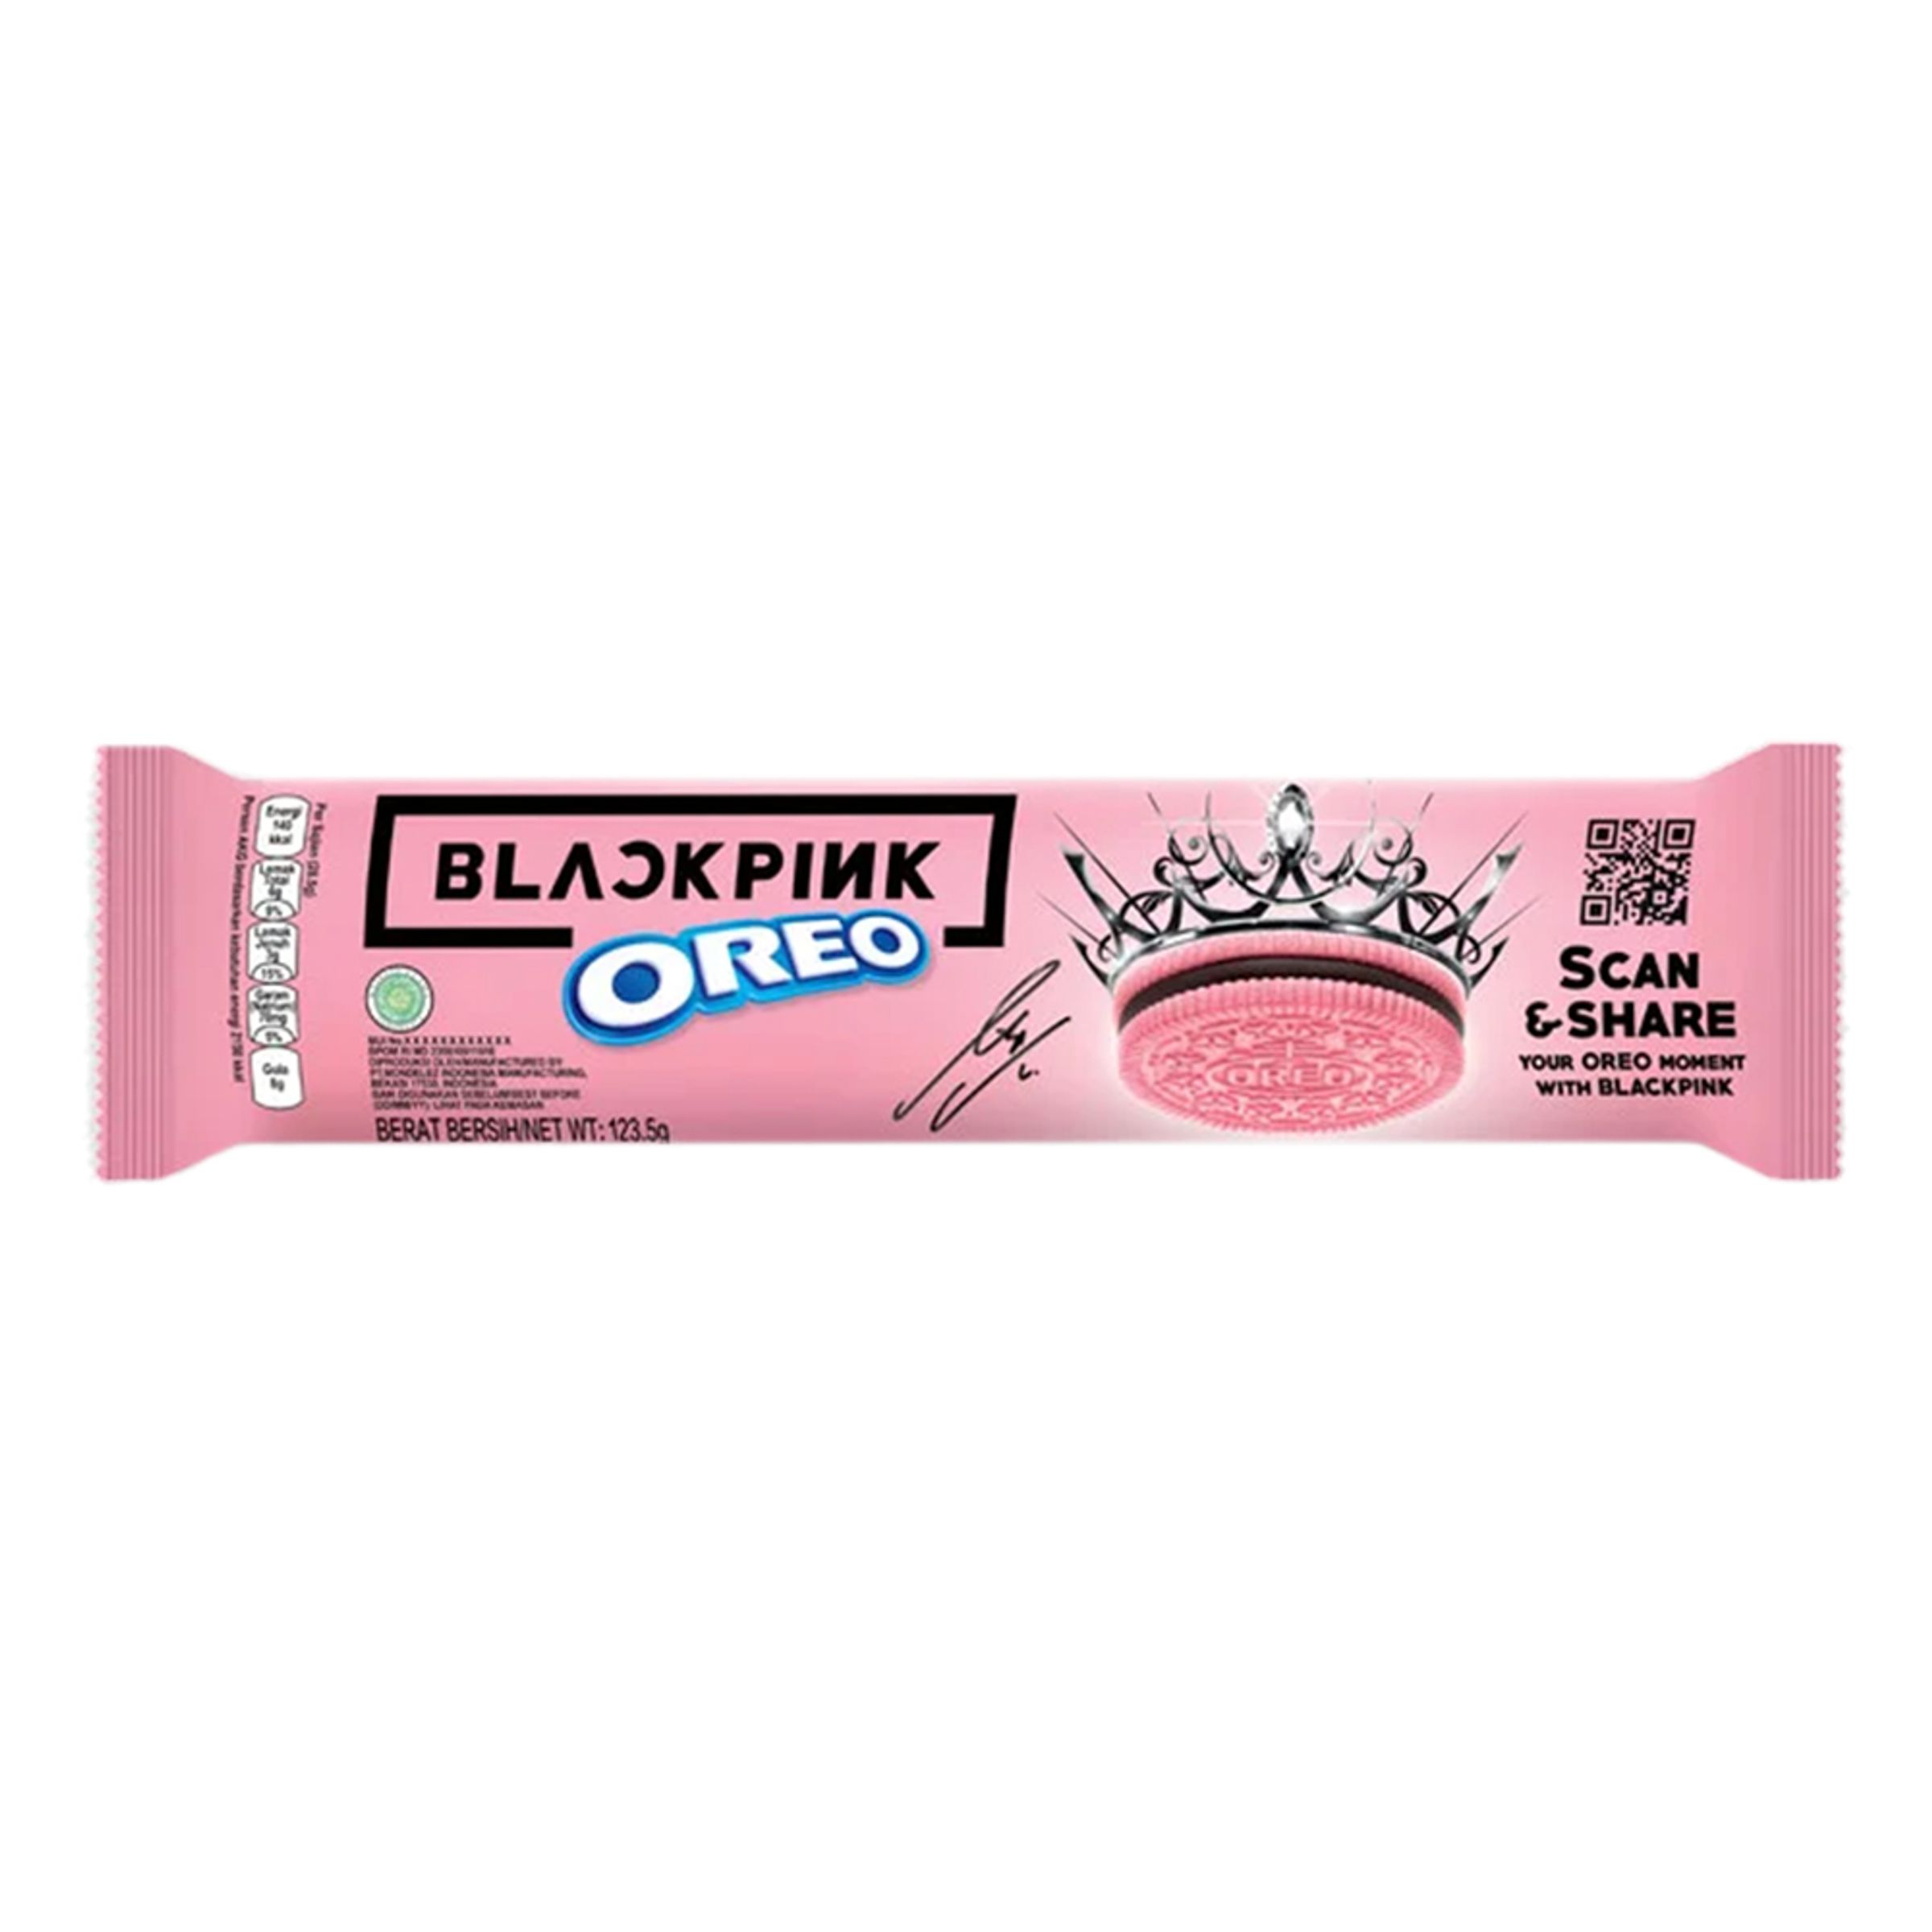 Oreo Blackpink - 123 gram